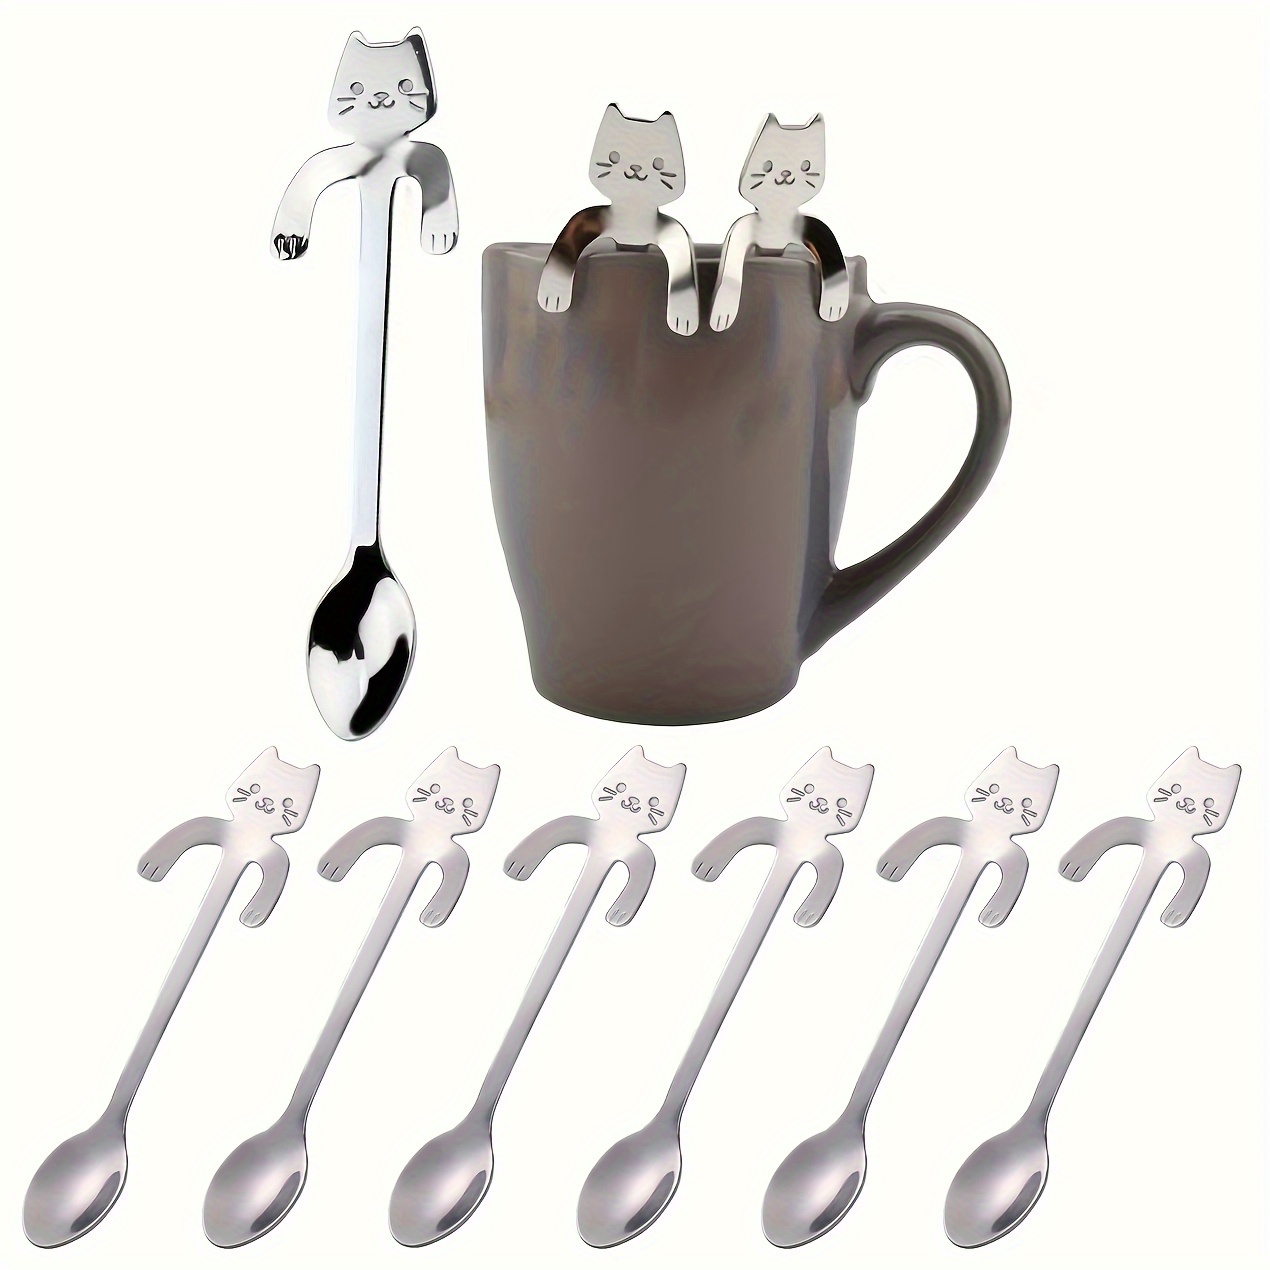 

6pcs Coffee Spoon, Cute Kawaii Cat Spoon, Sus304 Stainless Steel Spoon, Cute Spoon, Ice Cream Dessert Spoon, For Stirring Tea Coffee Sugar Dessert, Kitchen Supplies (silver)